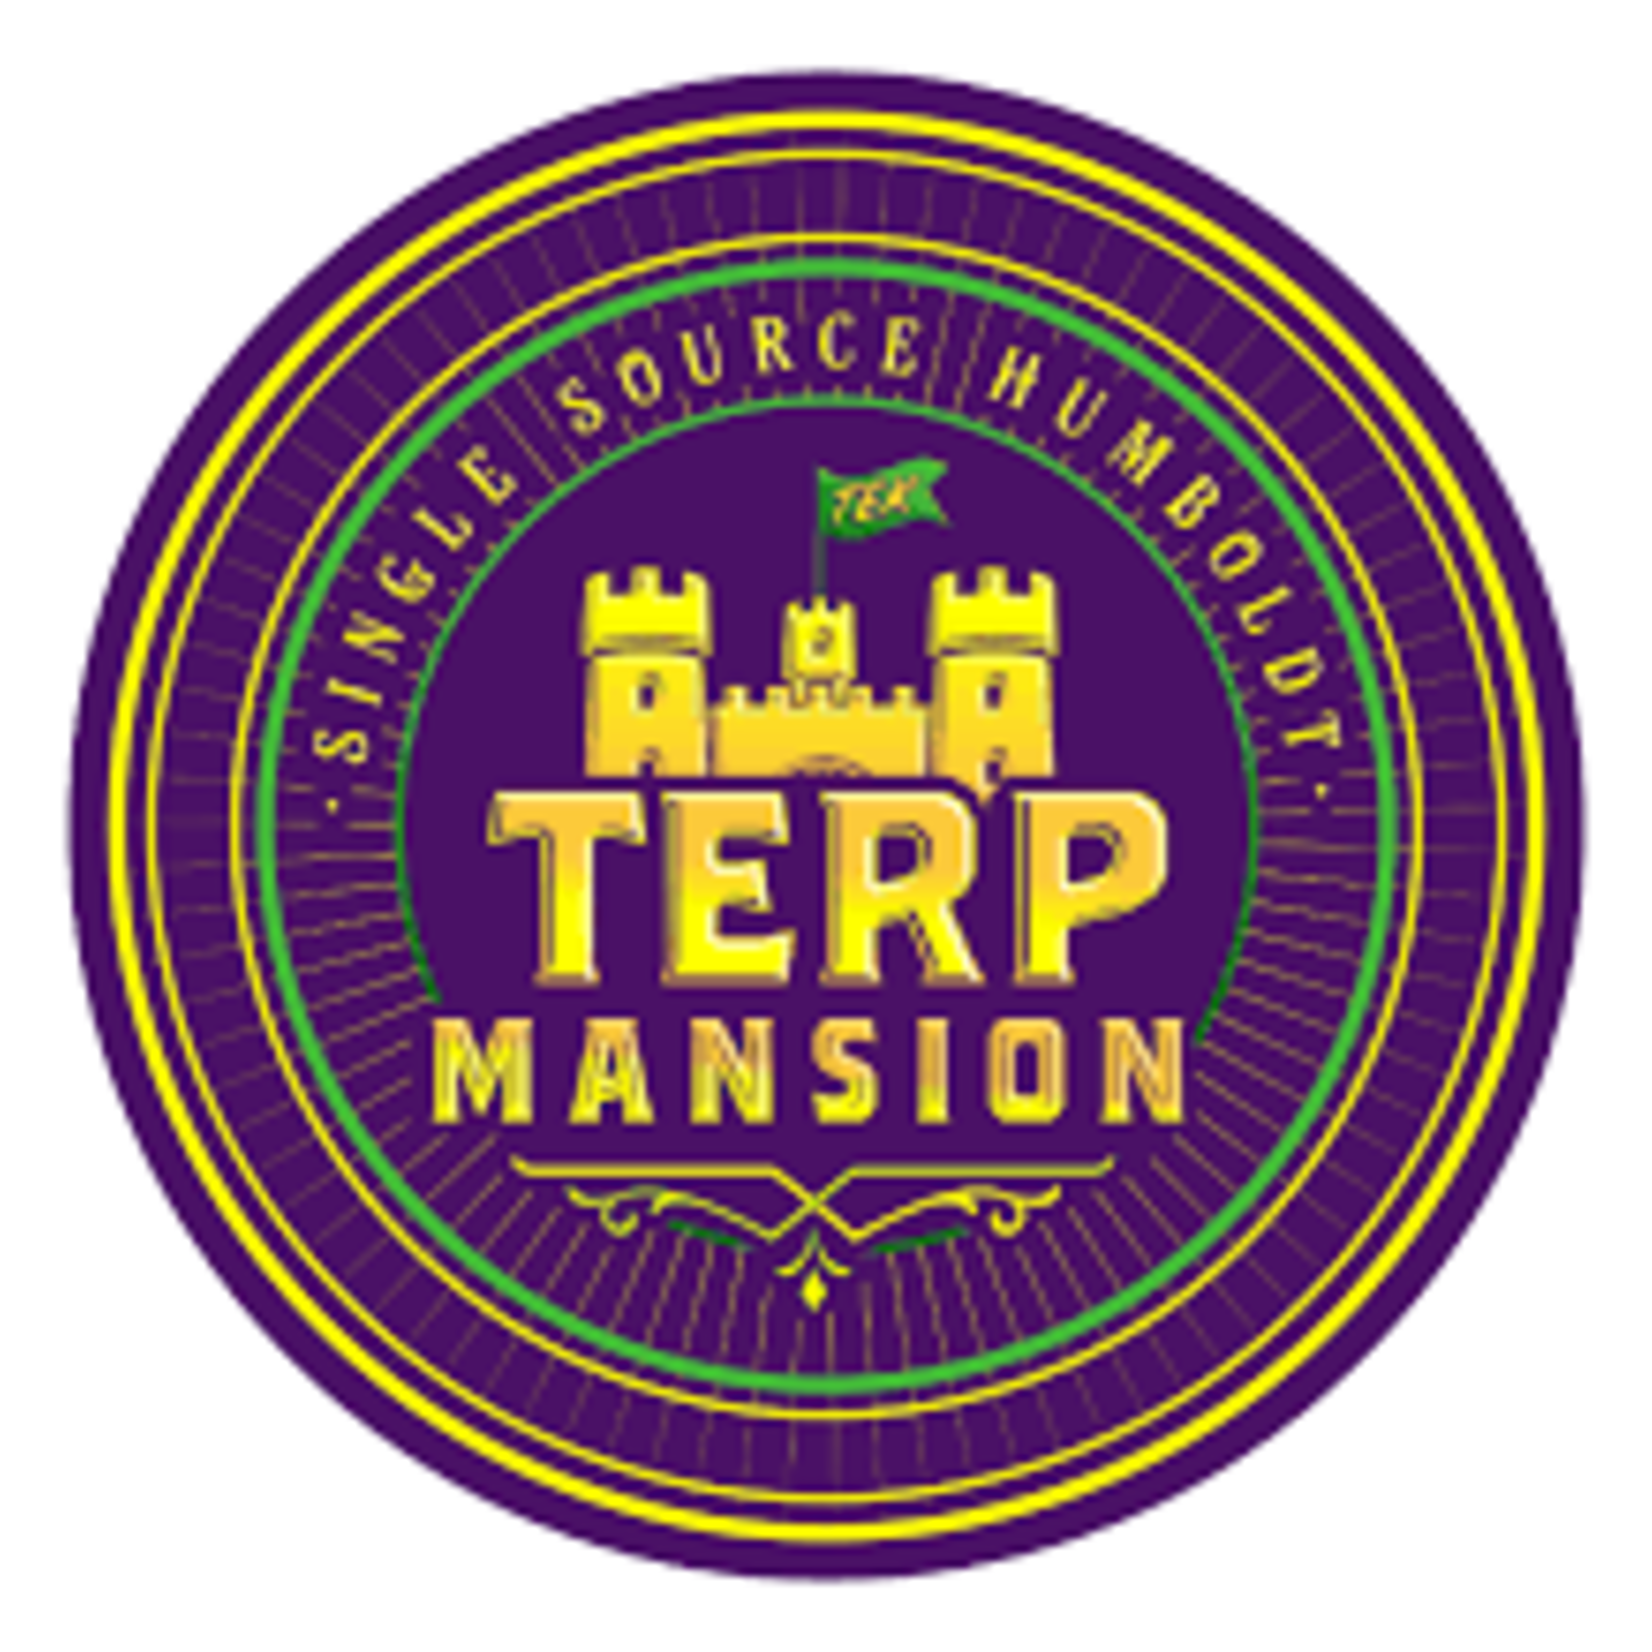 Terp Mansion / Fruit Punch